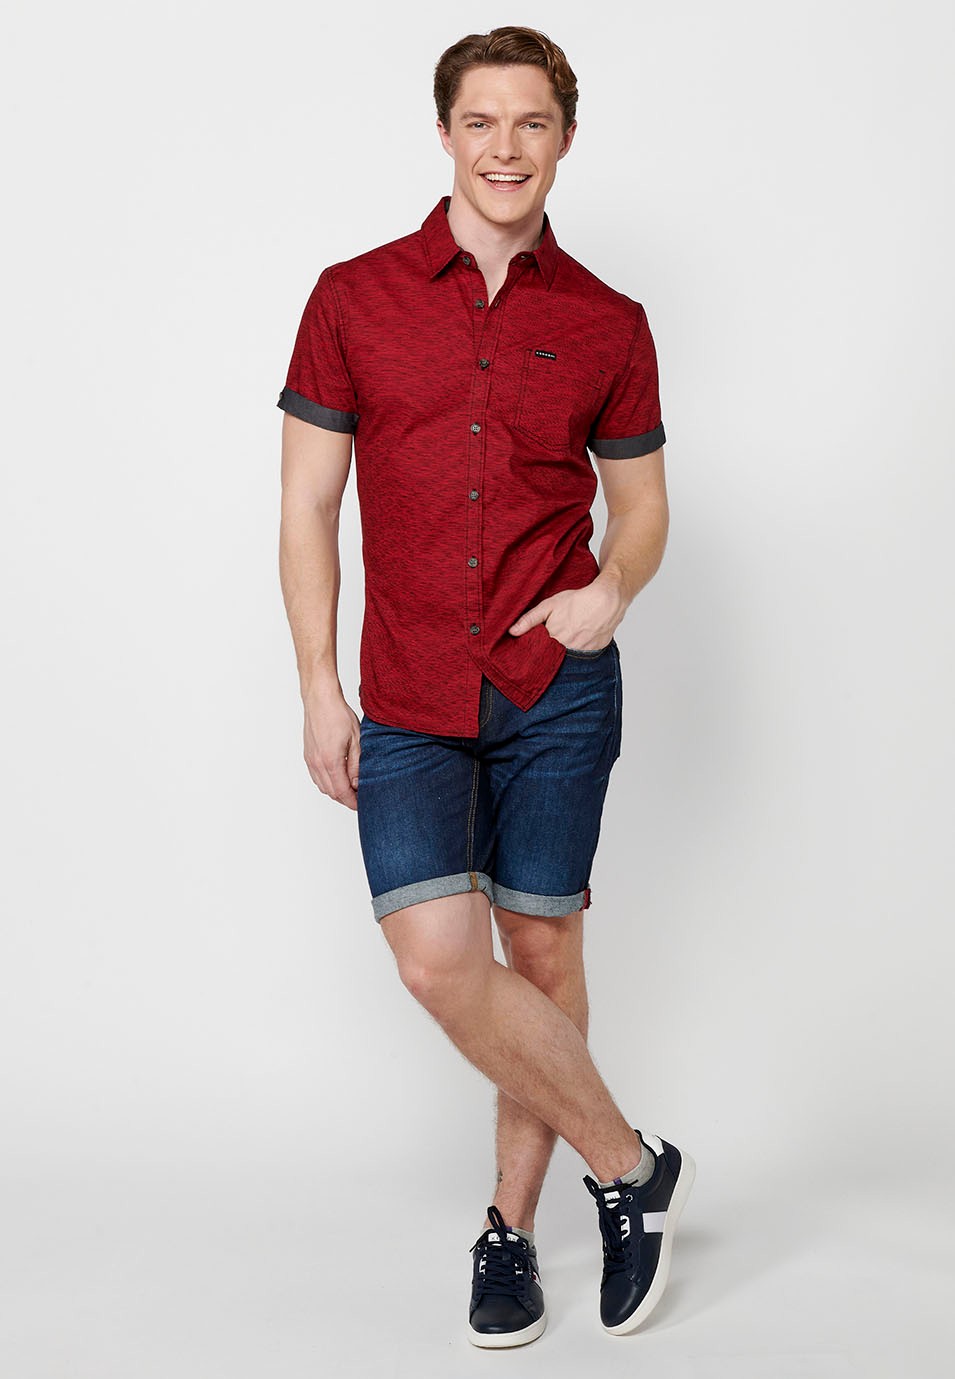 Short sleeve cotton shirt, red color for men